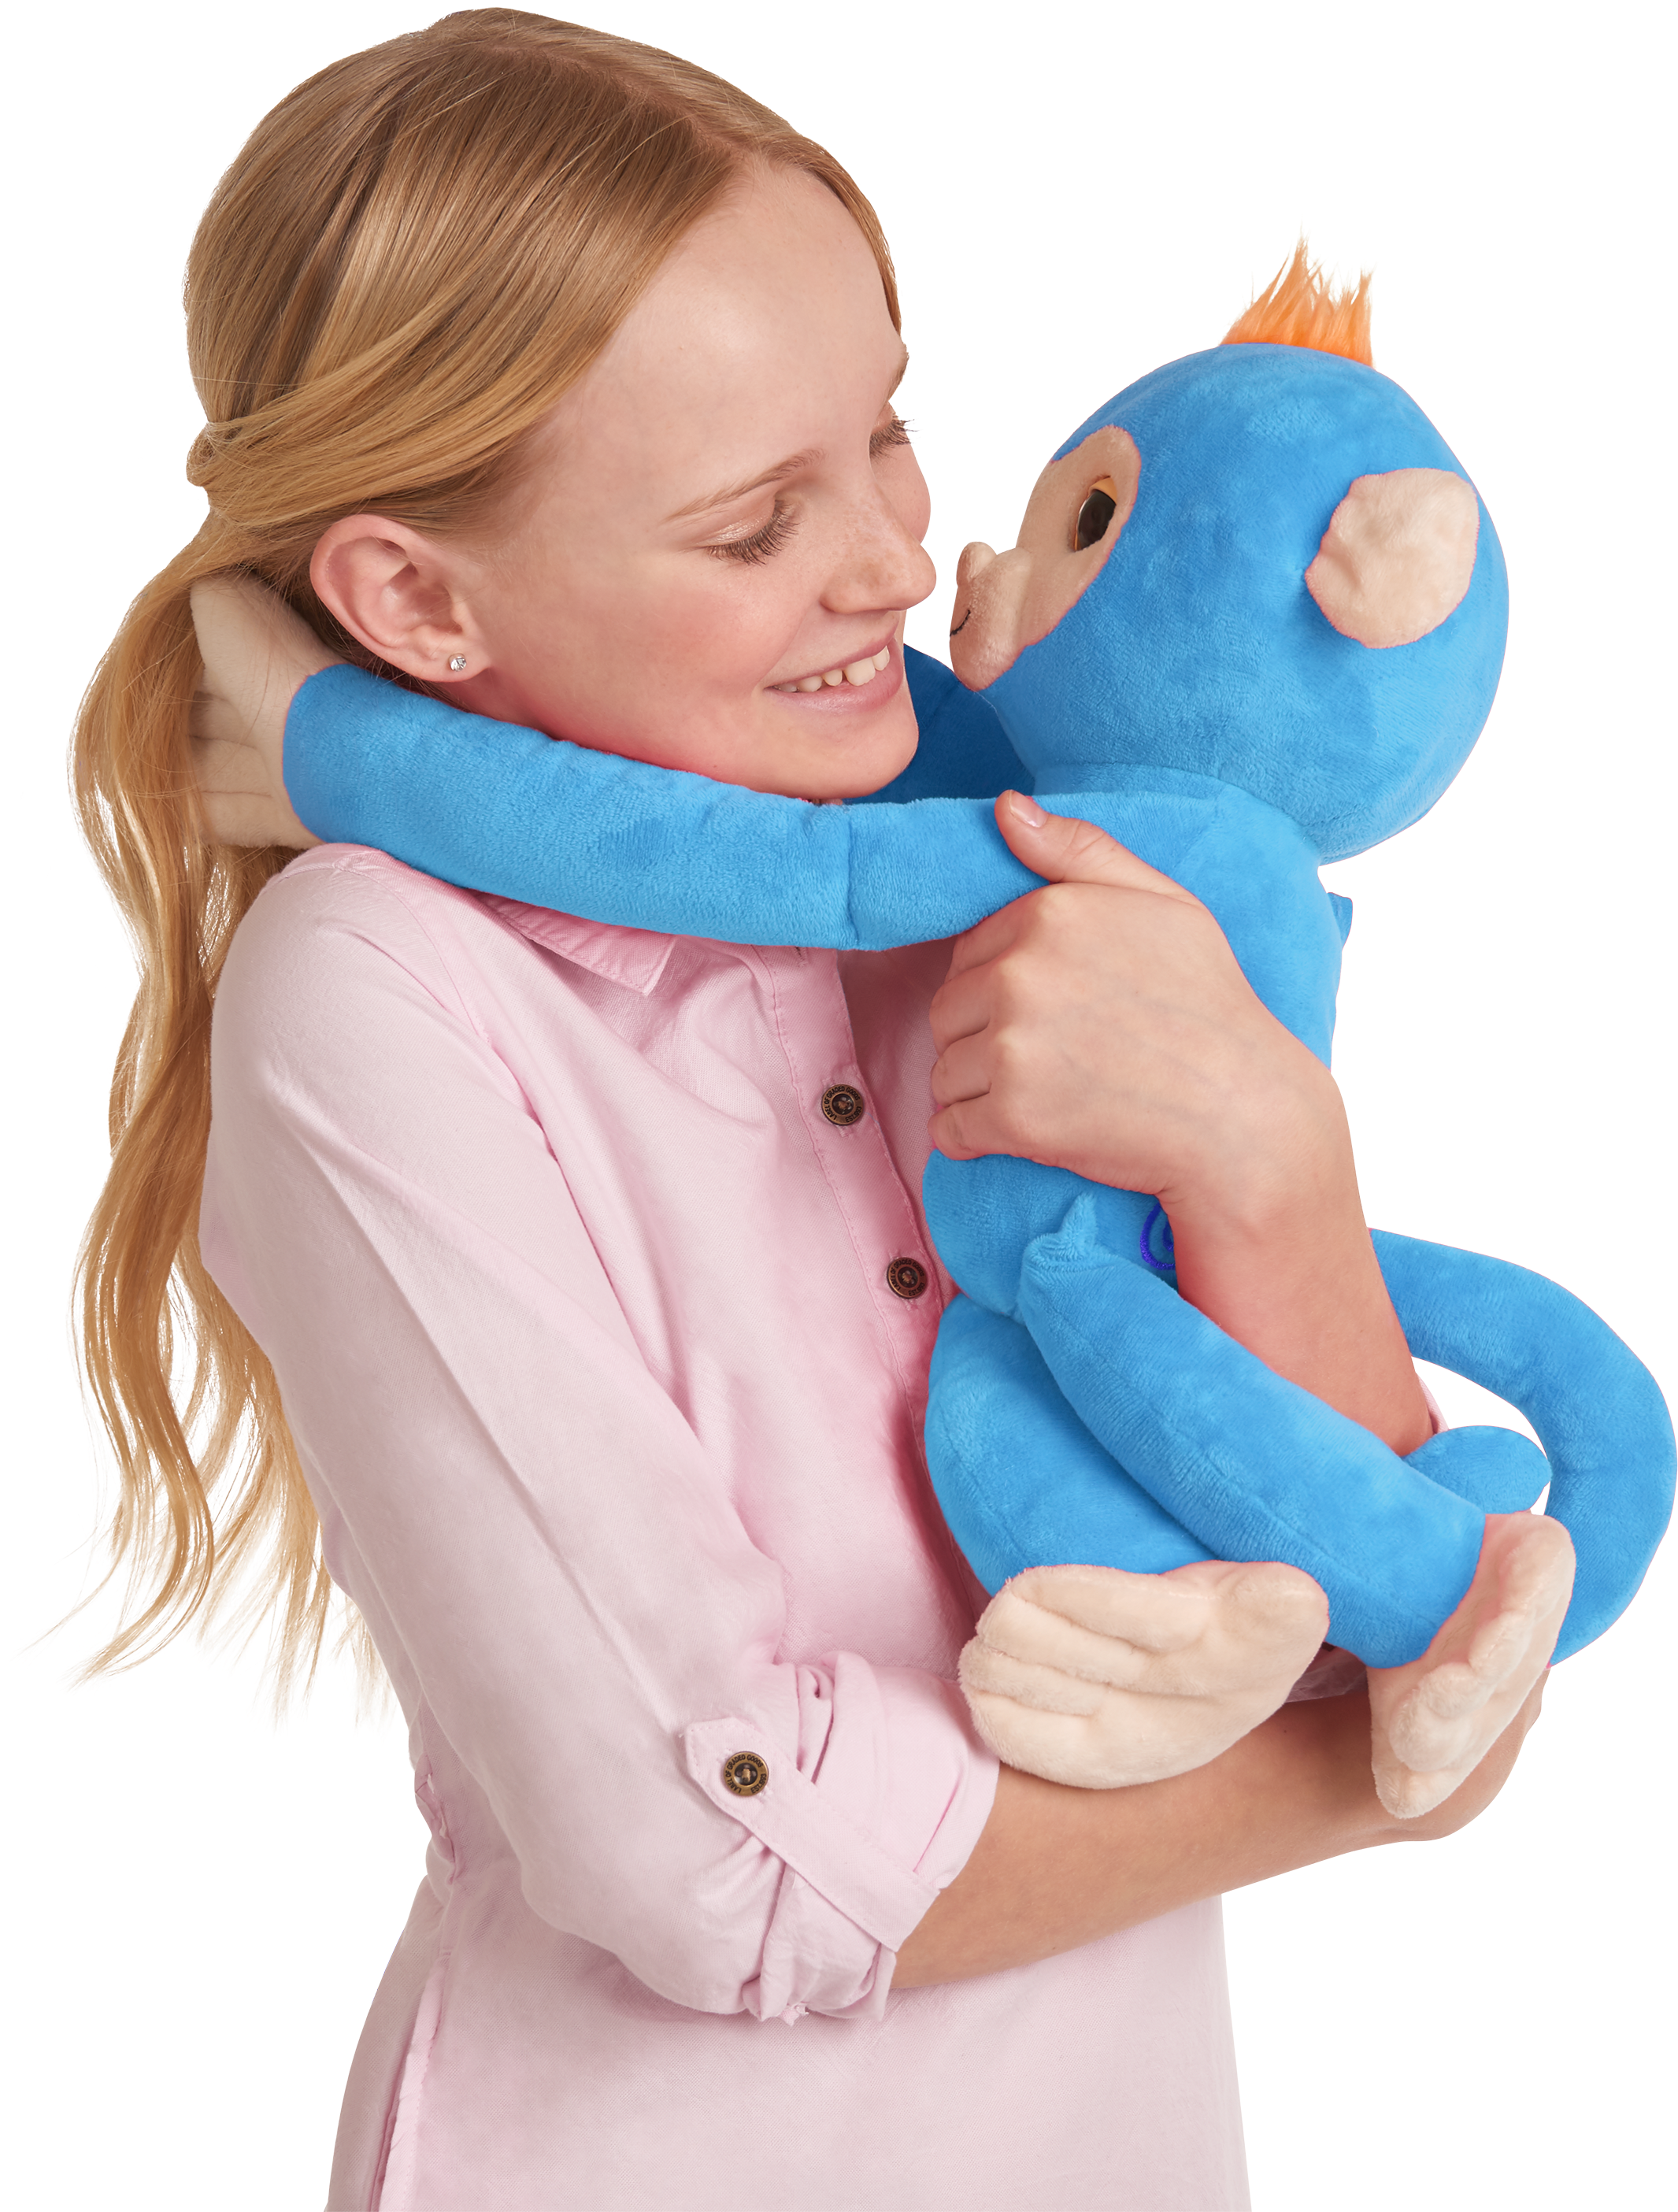 A Girl Holding A Blue Monkey Toy